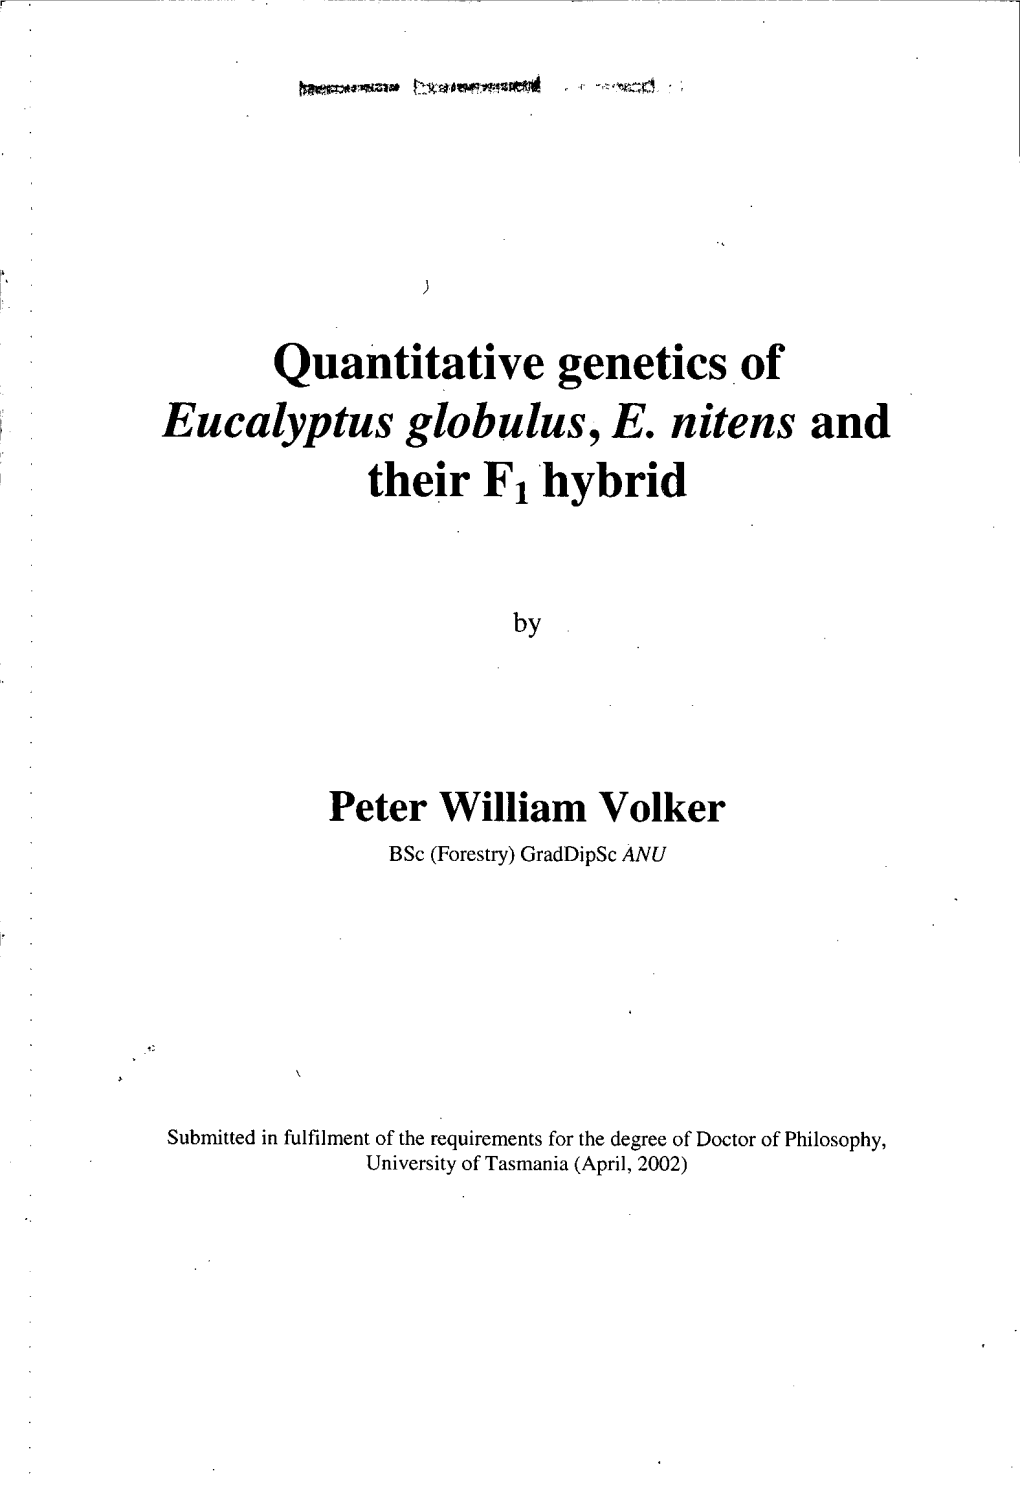 Quantitative Genetics. of Eucalyptus Globulus, E. Nitens and Their F1 'Hybrid